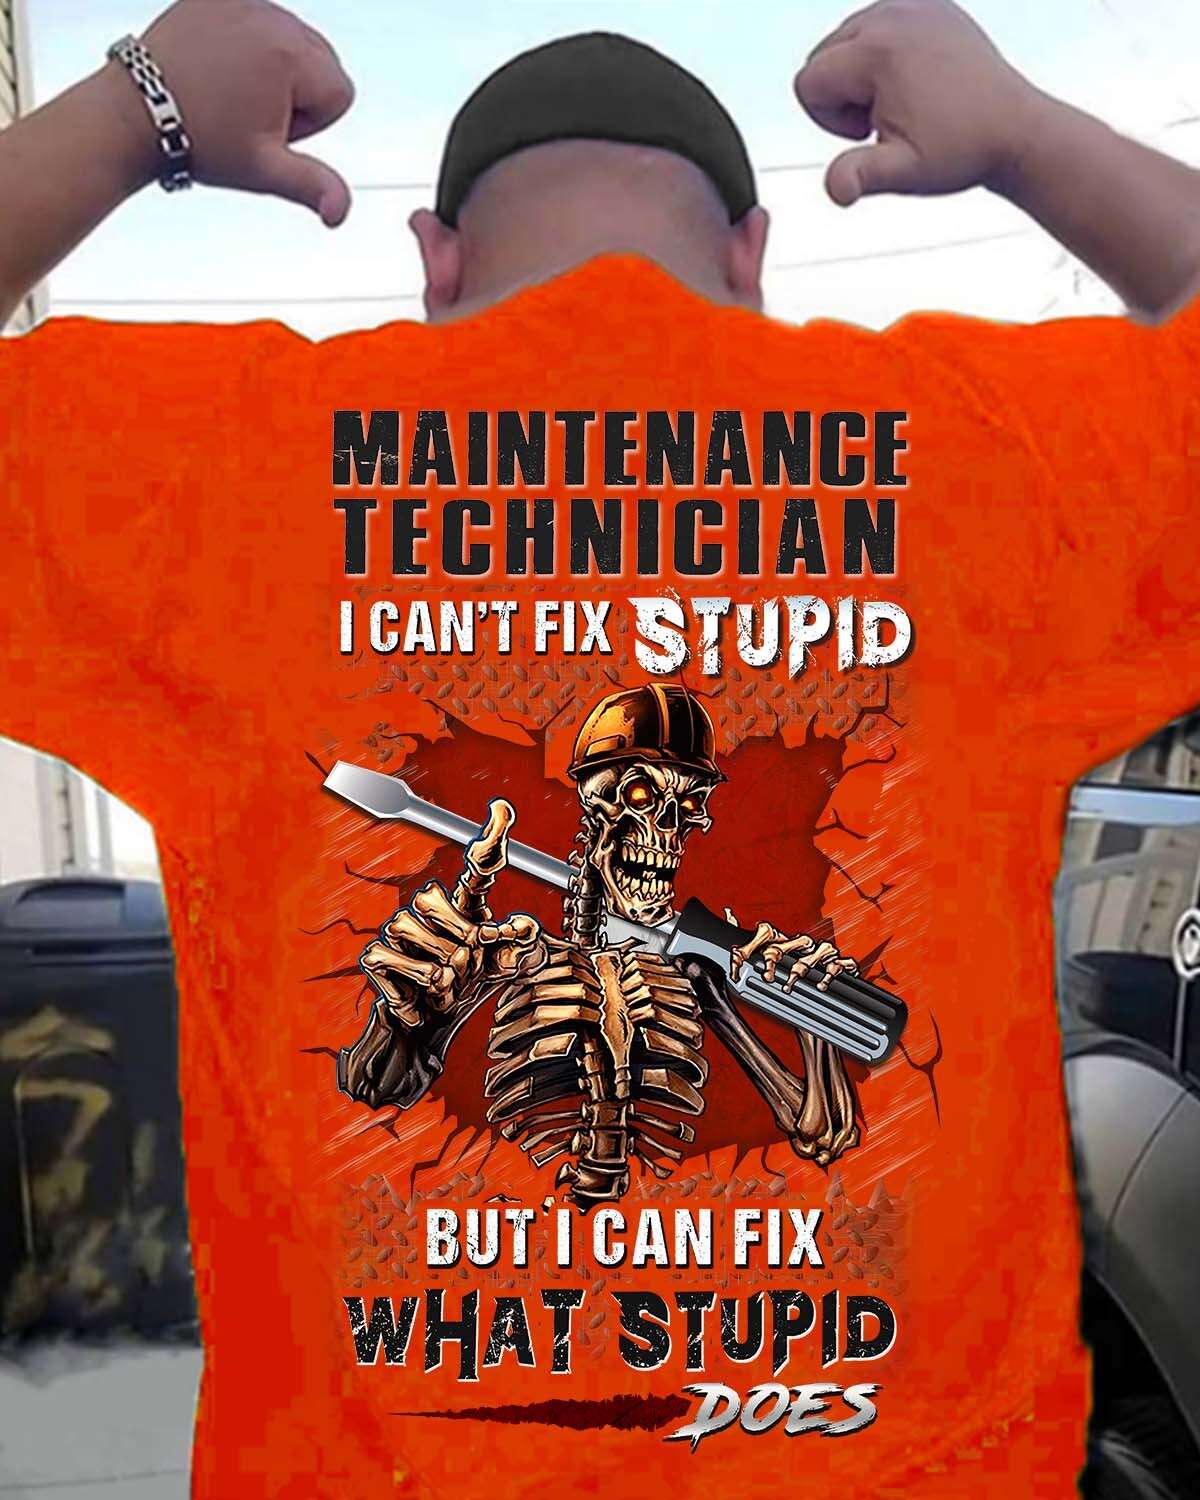 Maintenance technician I can't fix stupid but I can fix what stupid does - Skull technician